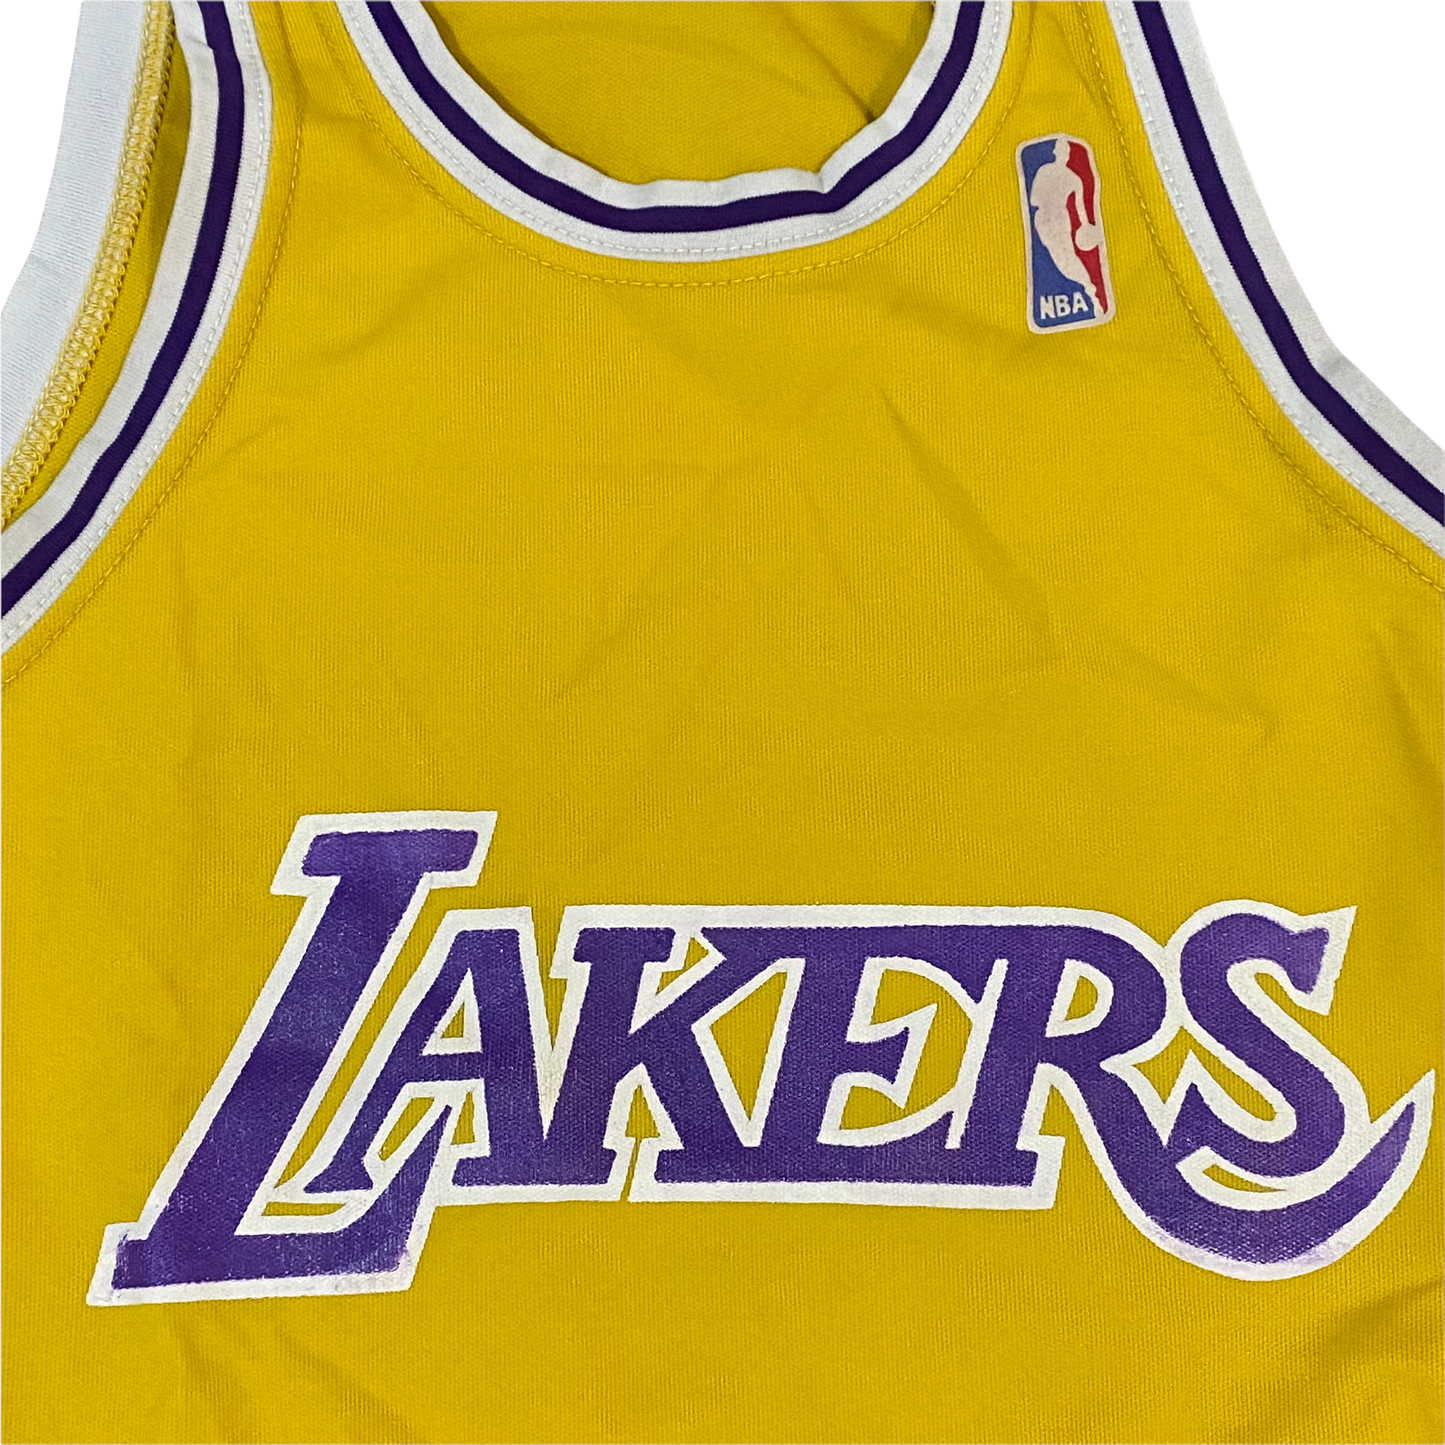 Vintage 1980s Los Angeles LA Lakers Sand Knit JERSEY - S by Rad Max Vintage